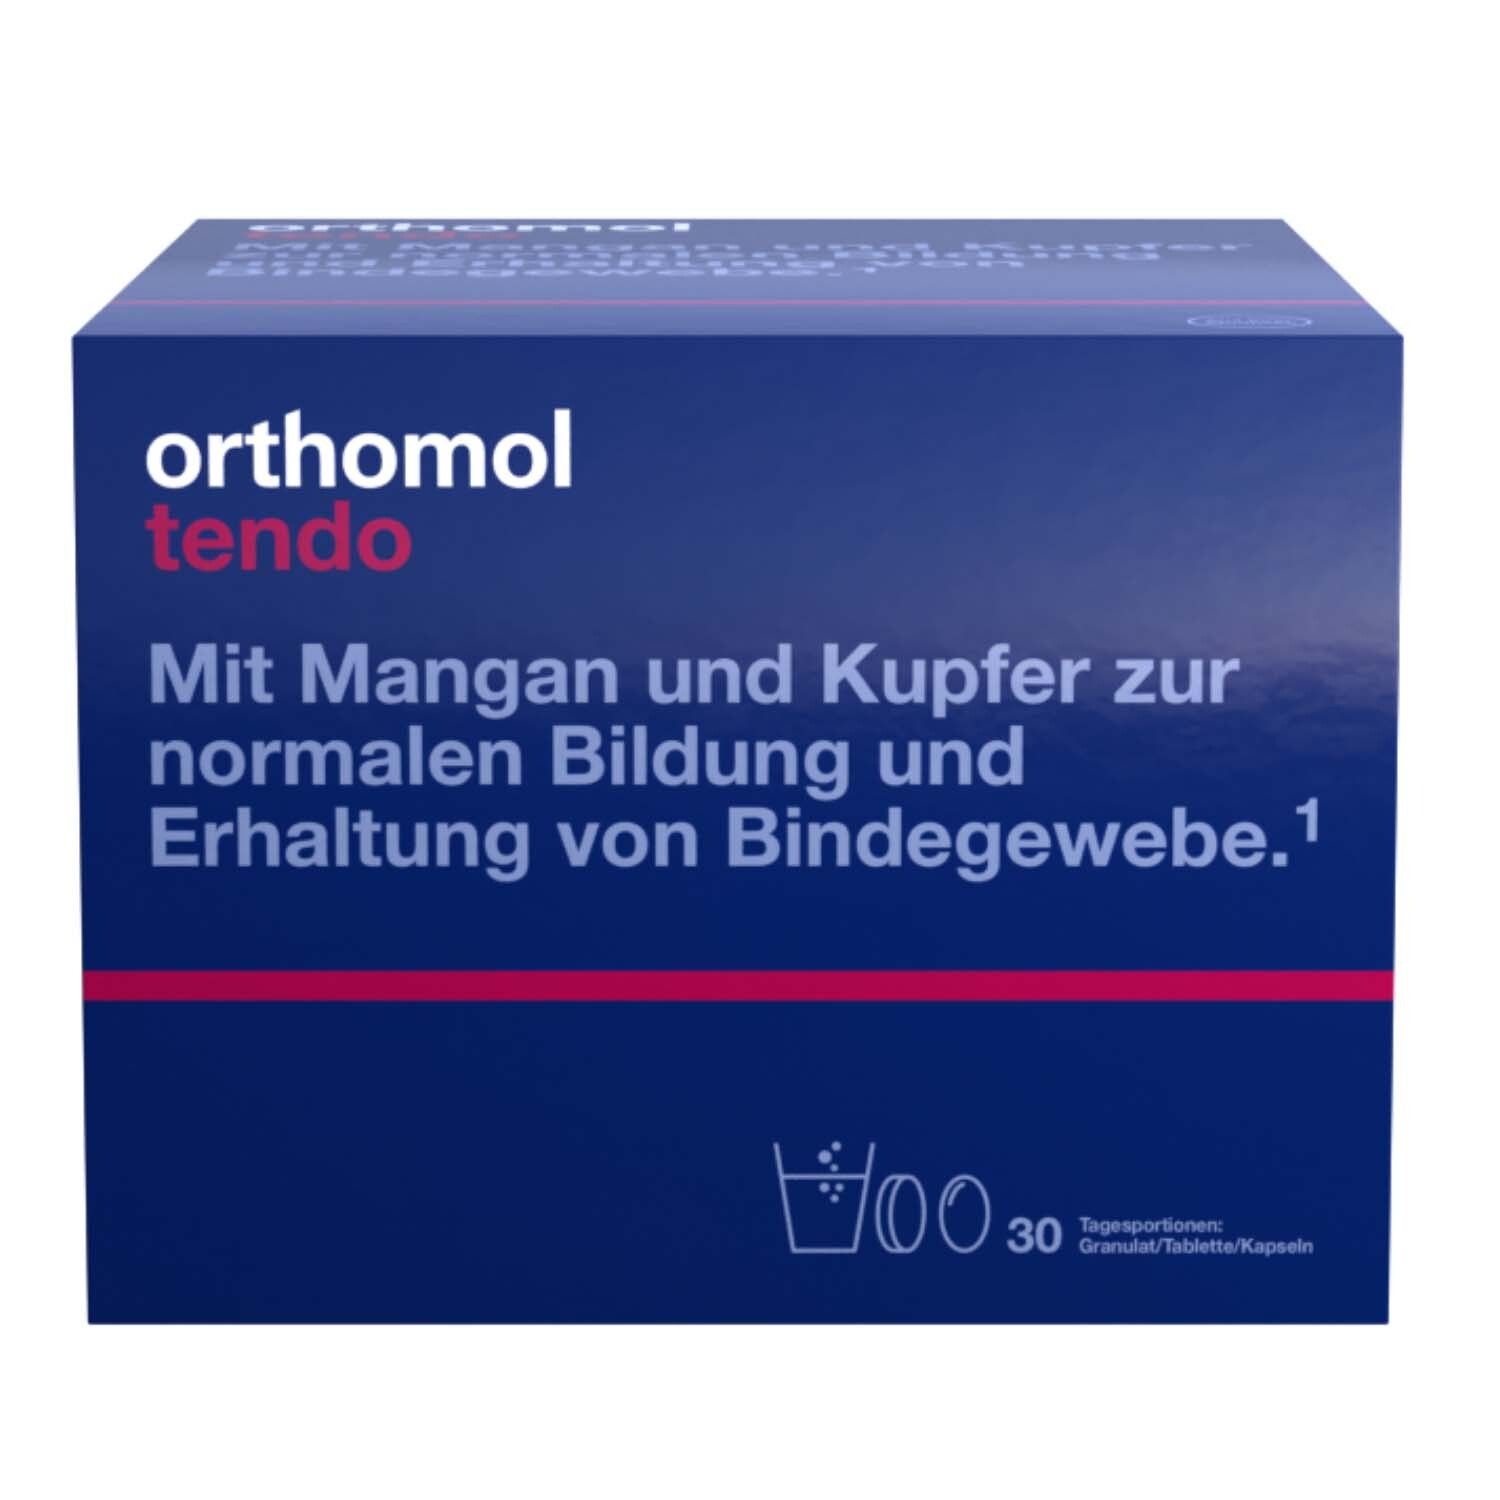 Orthomol Tendo Granulat/Tablette/Kapseln